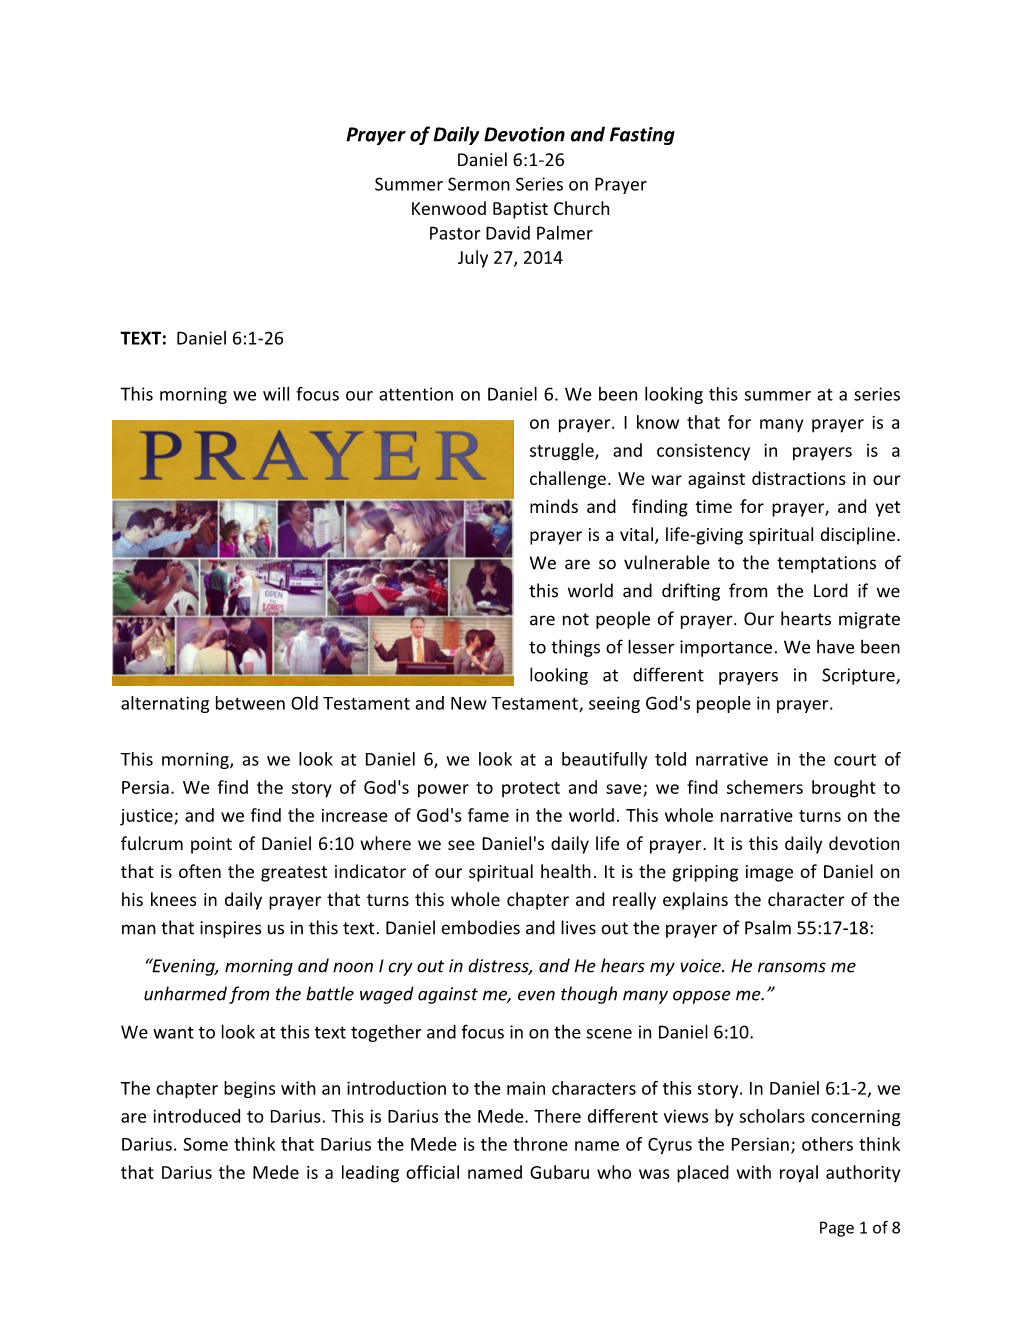 Prayer of Daily Devotion and Fasting Daniel 6:1-26 Summer Sermon Series on Prayer Kenwood Baptist Church Pastor David Palmer July 27, 2014